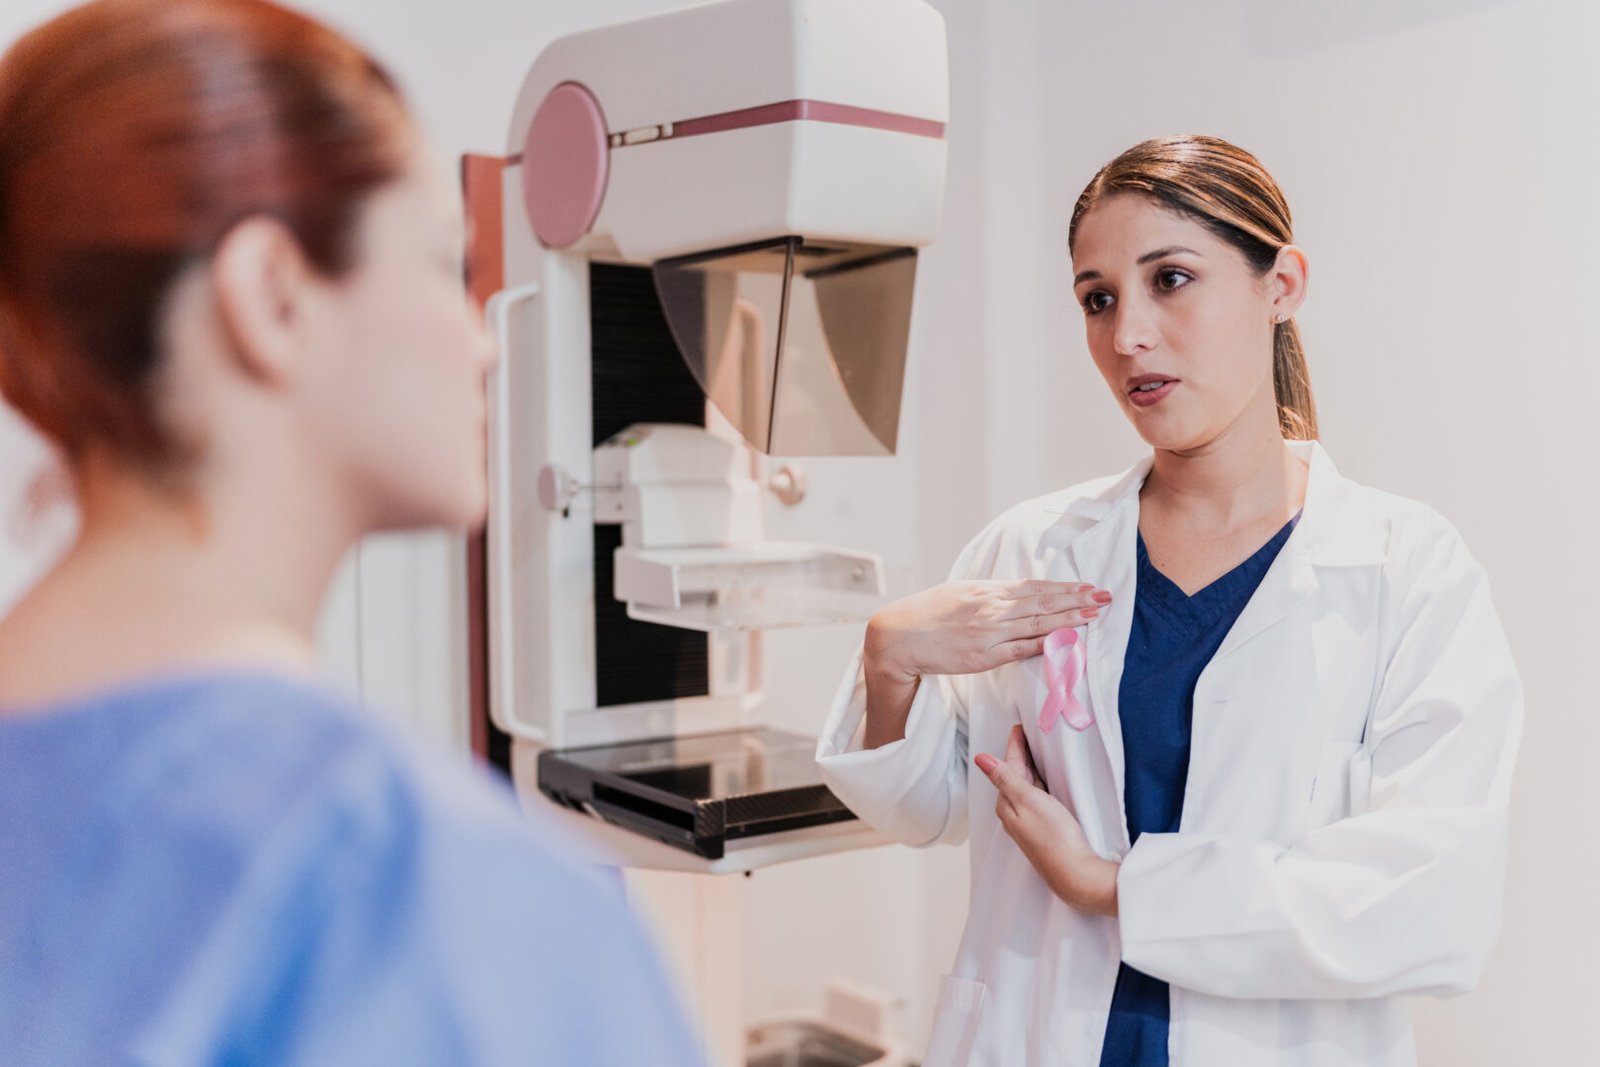 A patient and doctor talk beside a mammogram machine.